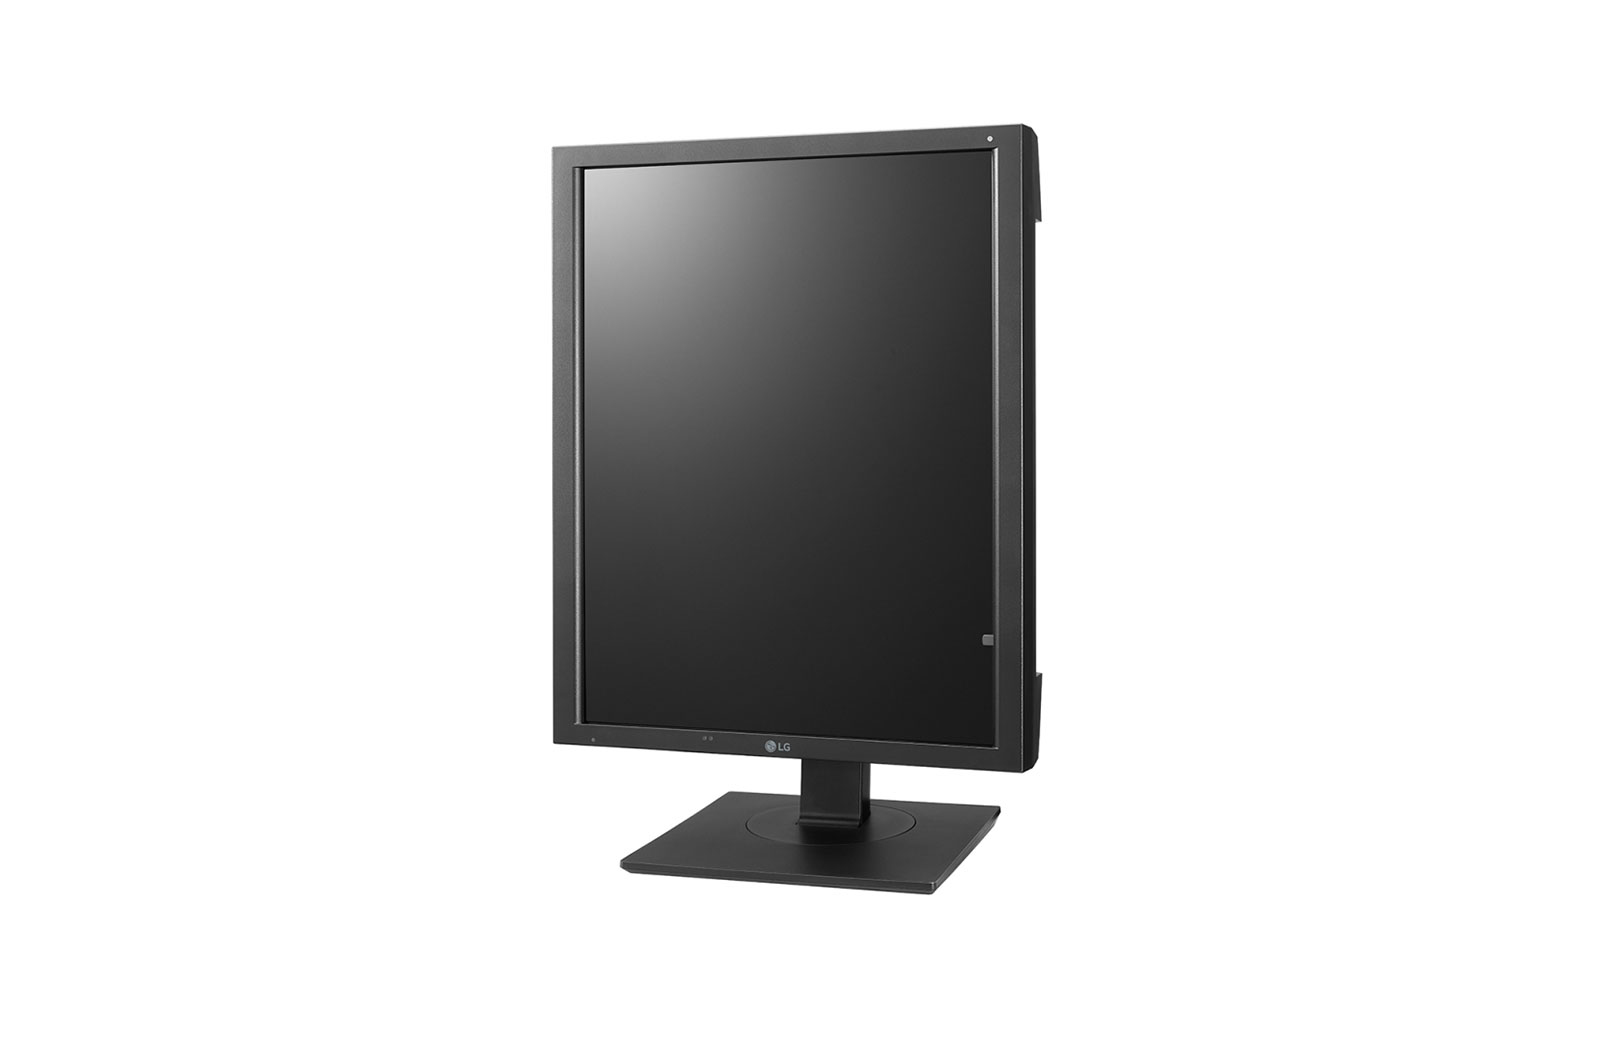 LG 21HK512D computer monitor